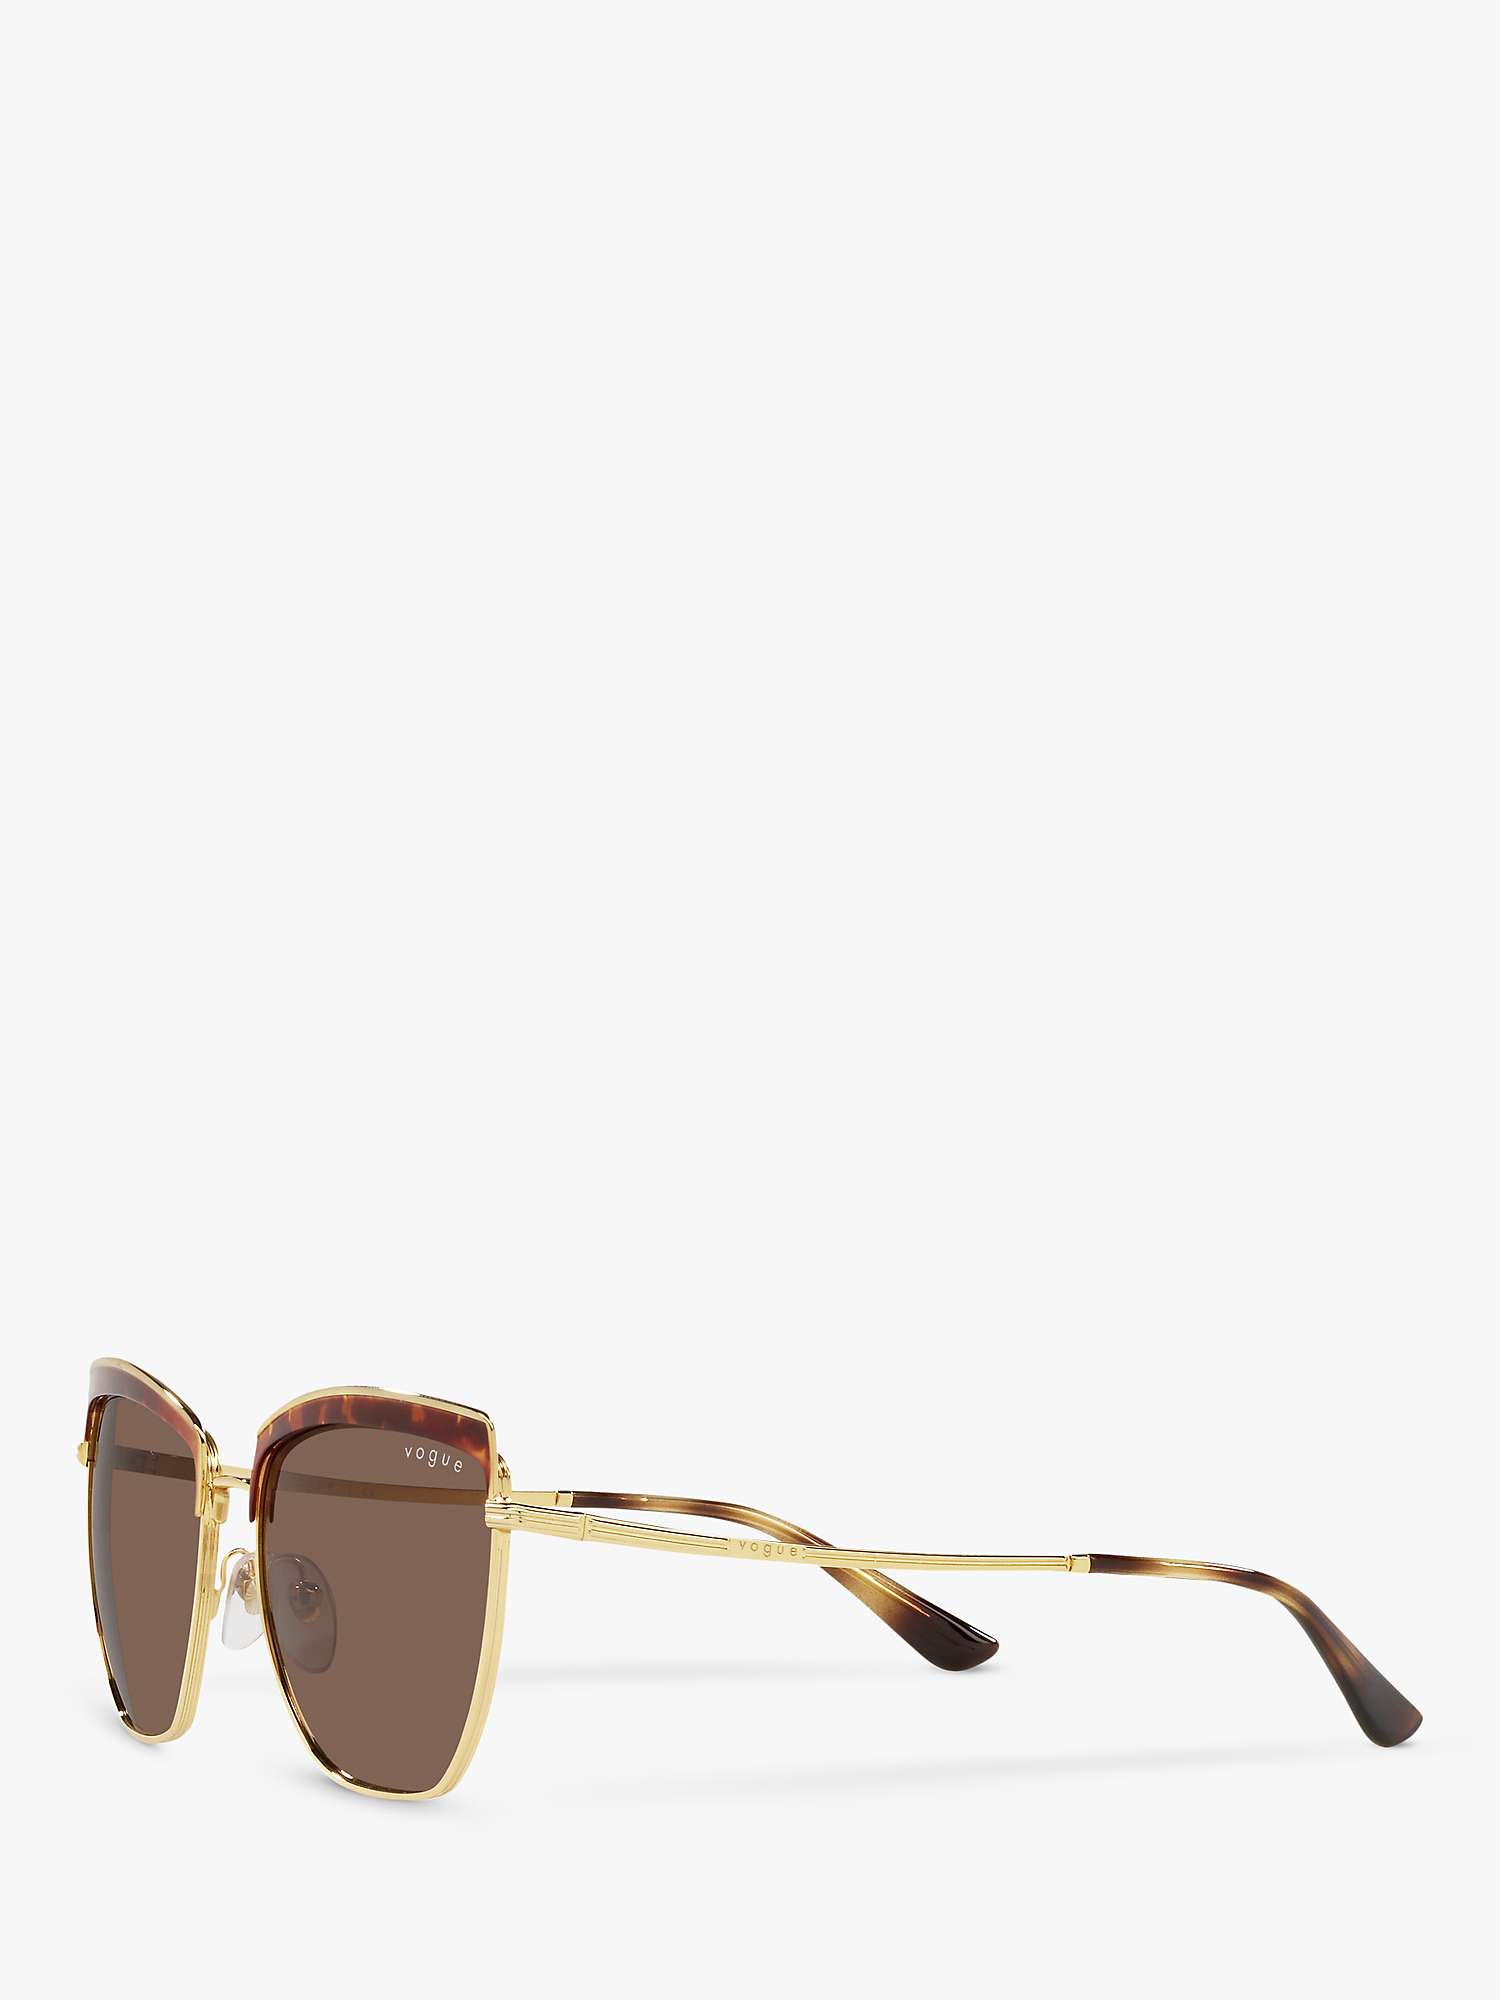 Buy Vogue VO4234S Women's Irregular Sunglasses, Gold/Brown Online at johnlewis.com